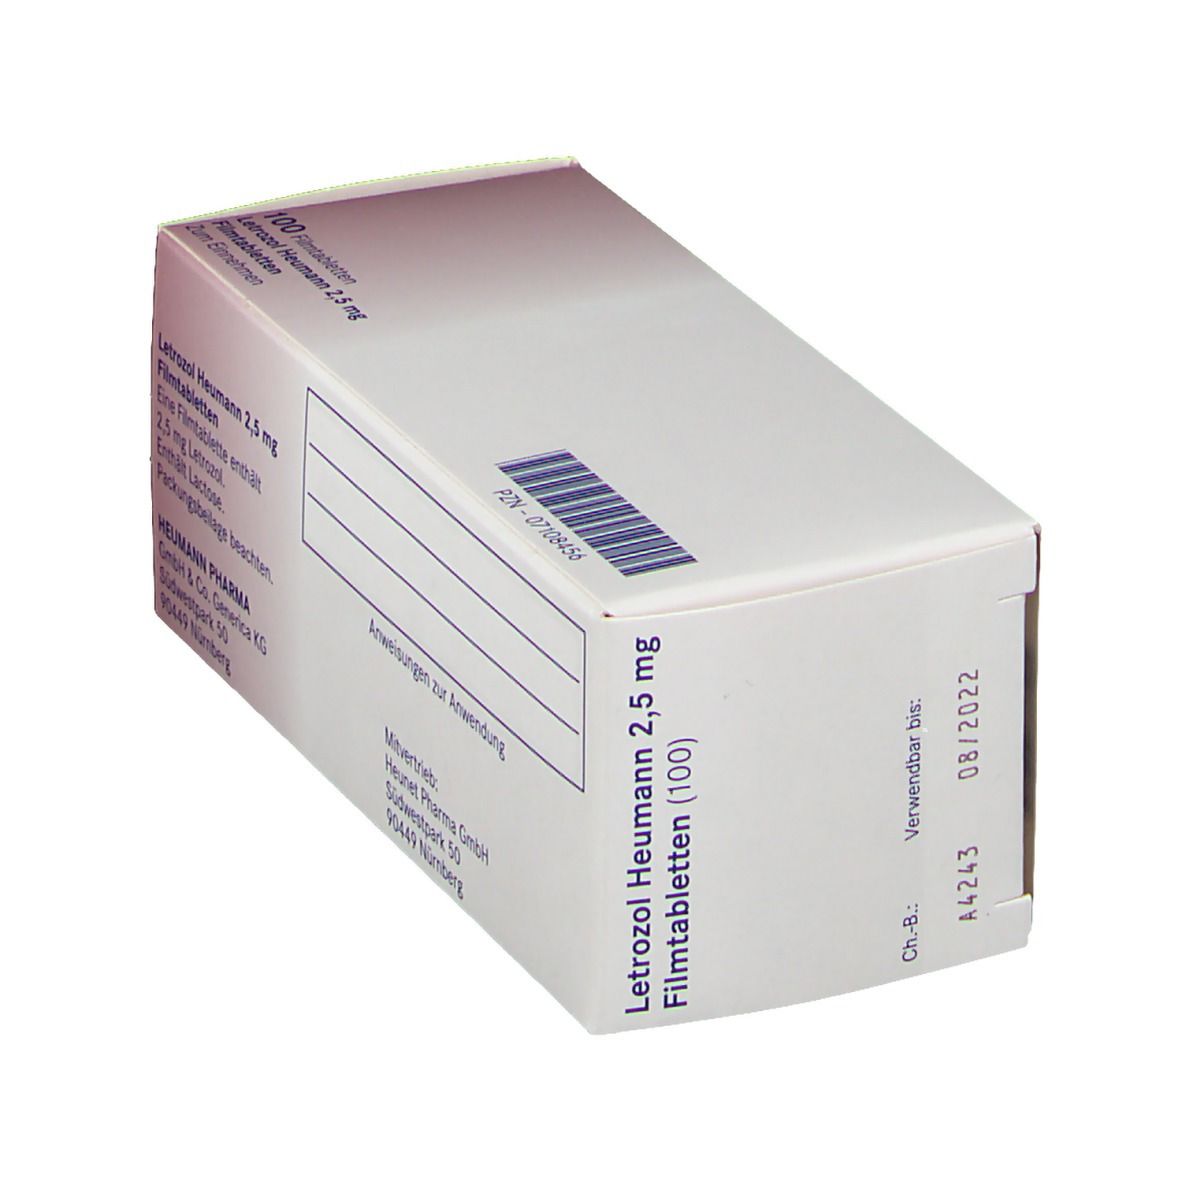 Letrozol Heumann 2,5 mg